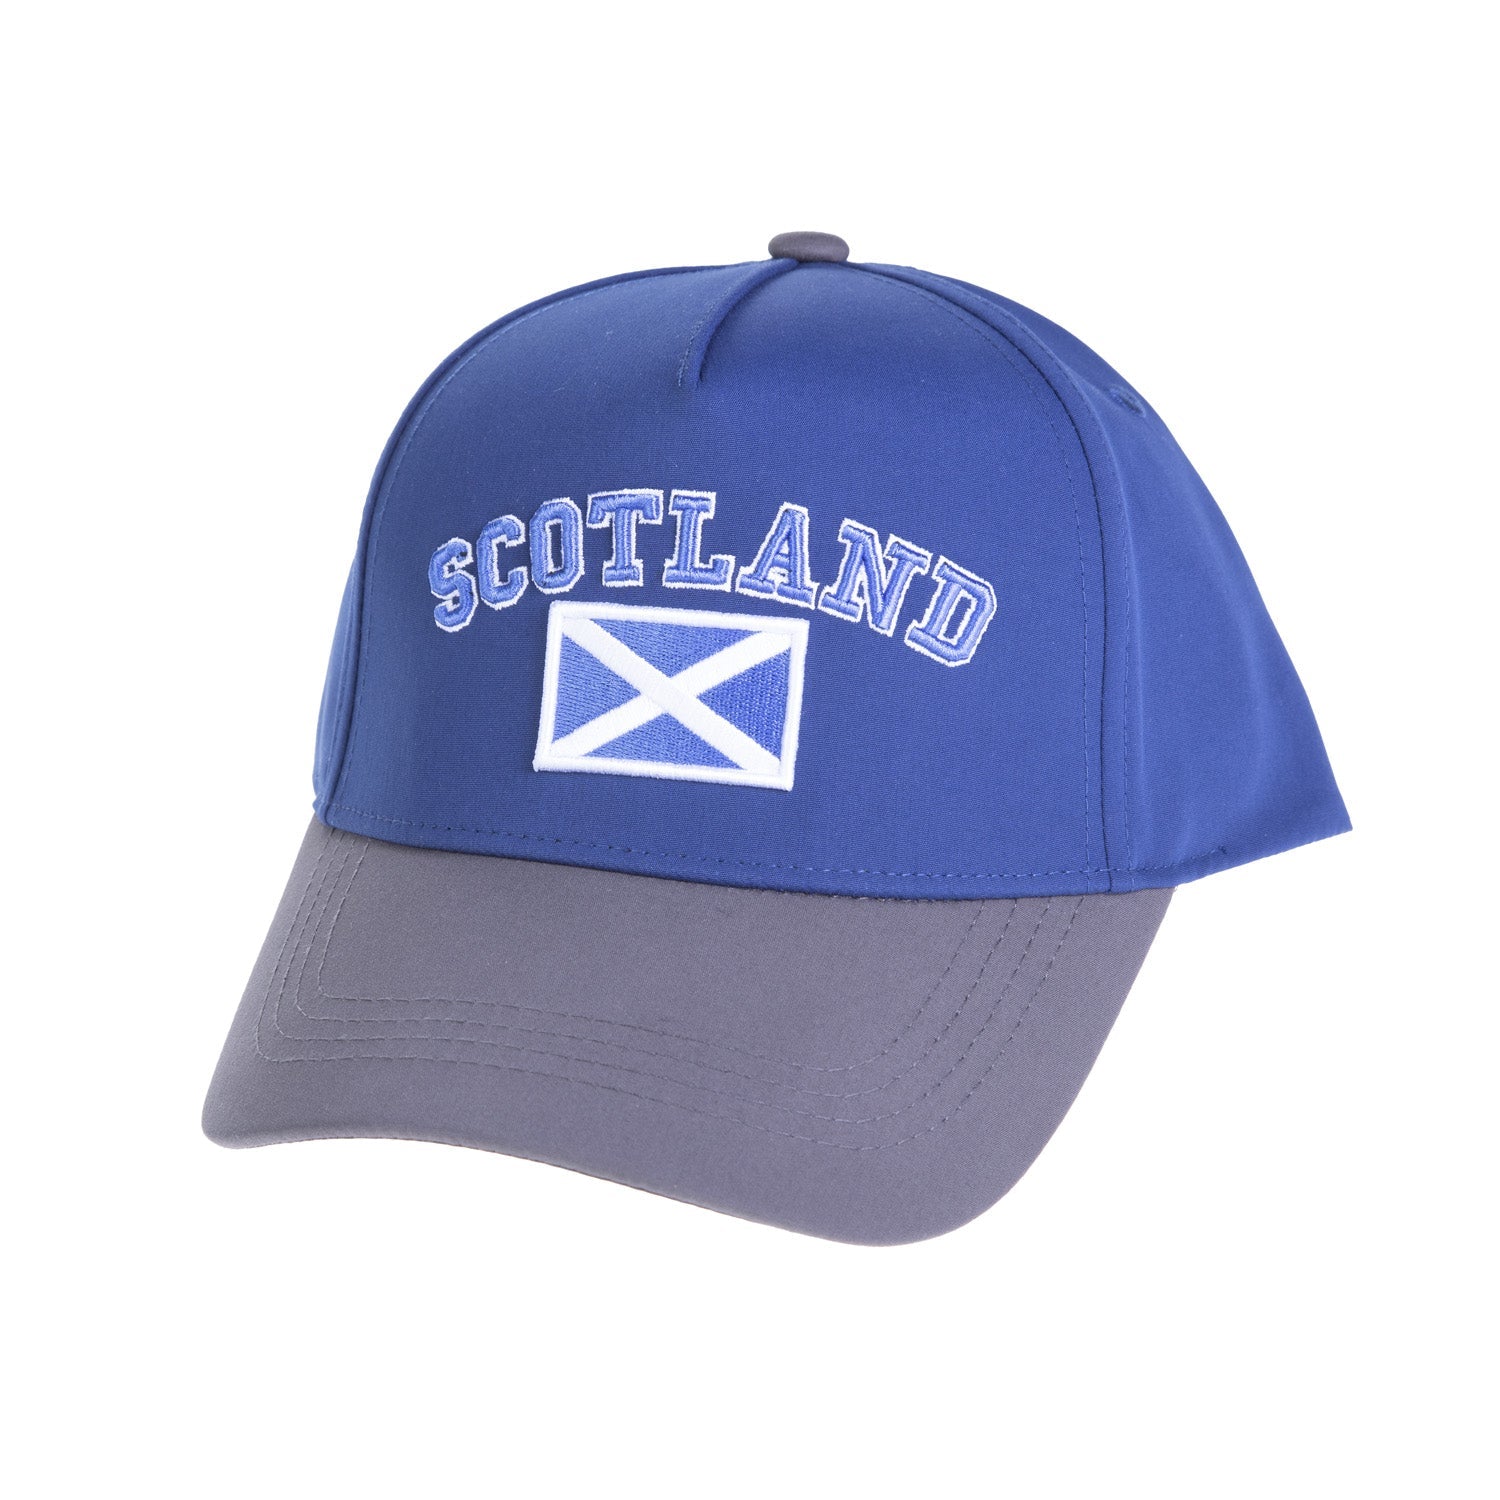 Scotland Cap